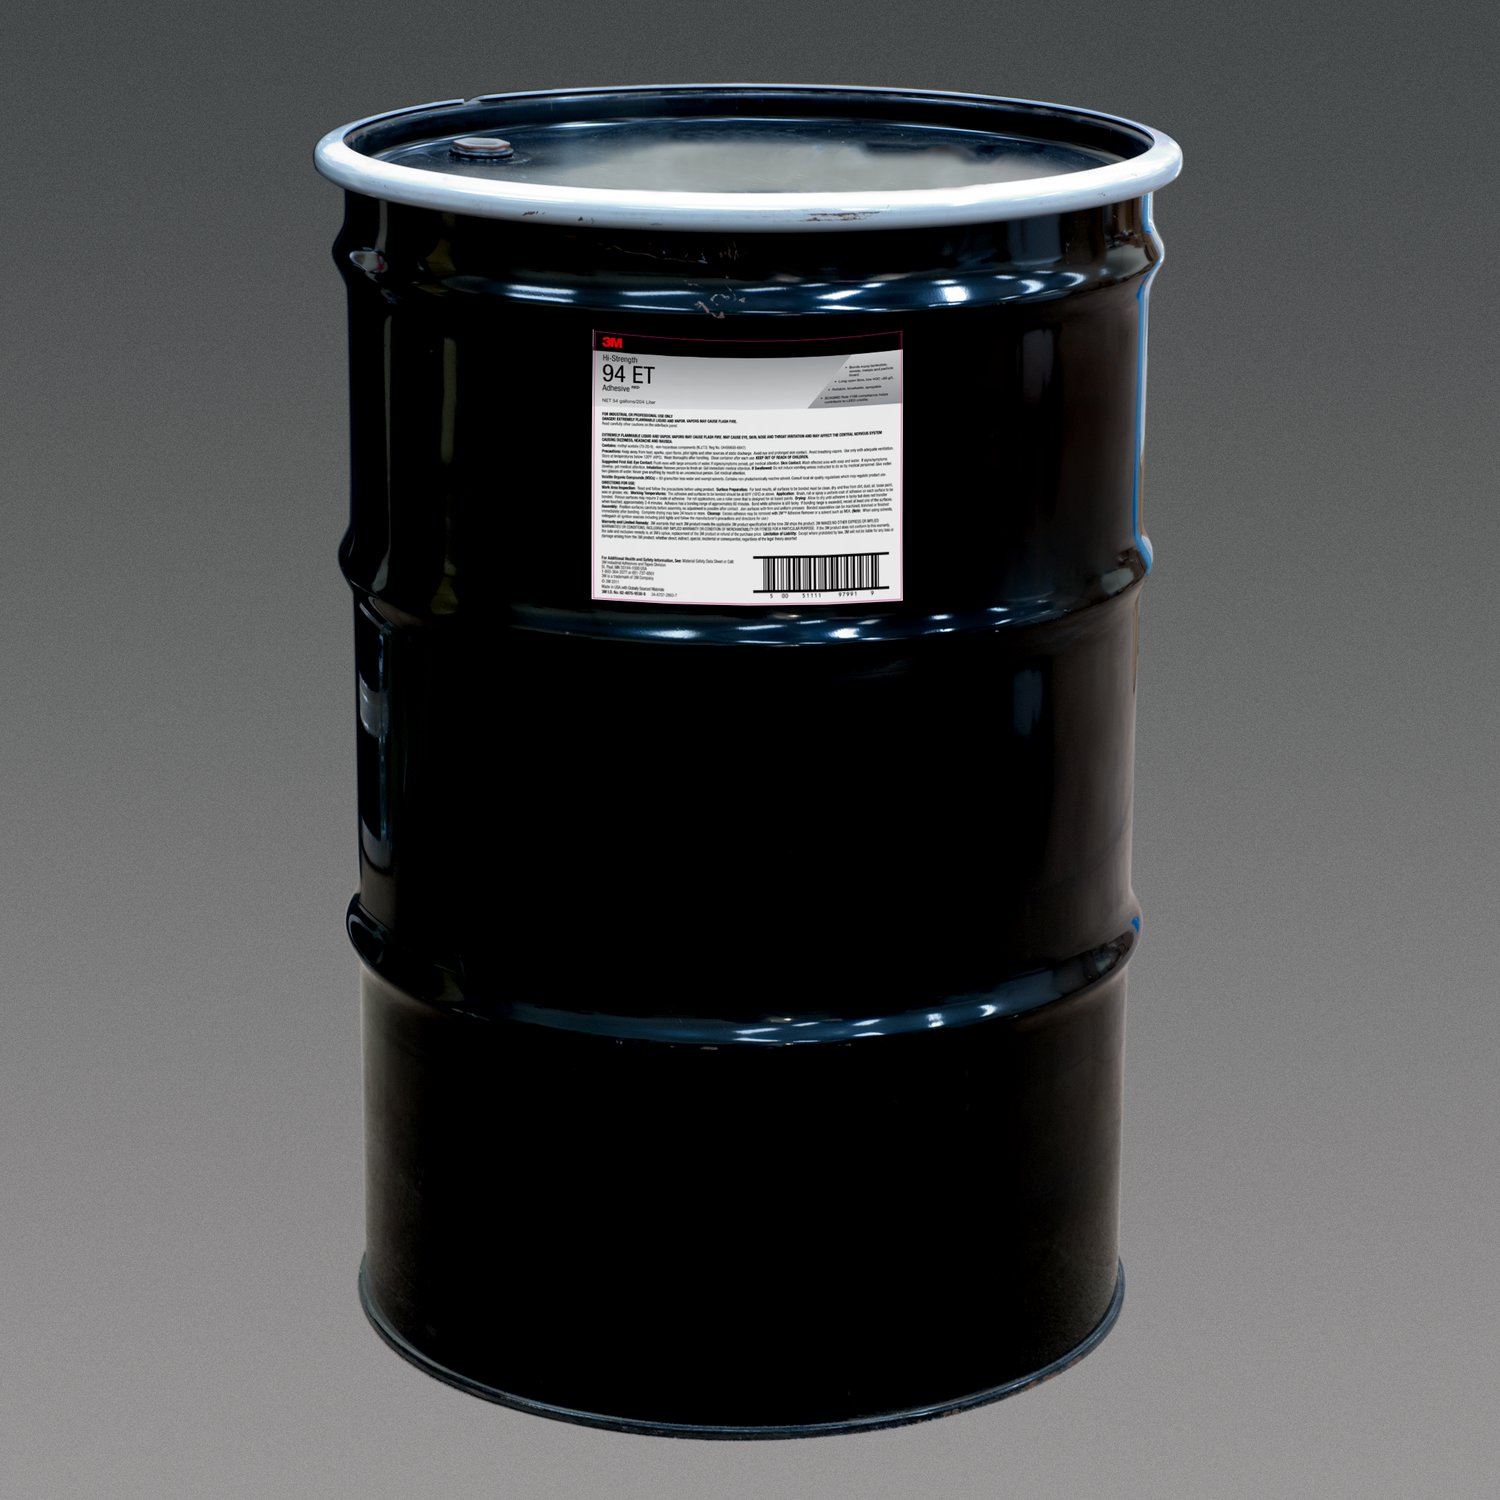 7100014162 - 3M Hi-Strength 94 ET Adhesive, Red, 55 Gallon Drum (54 Gallon Net)